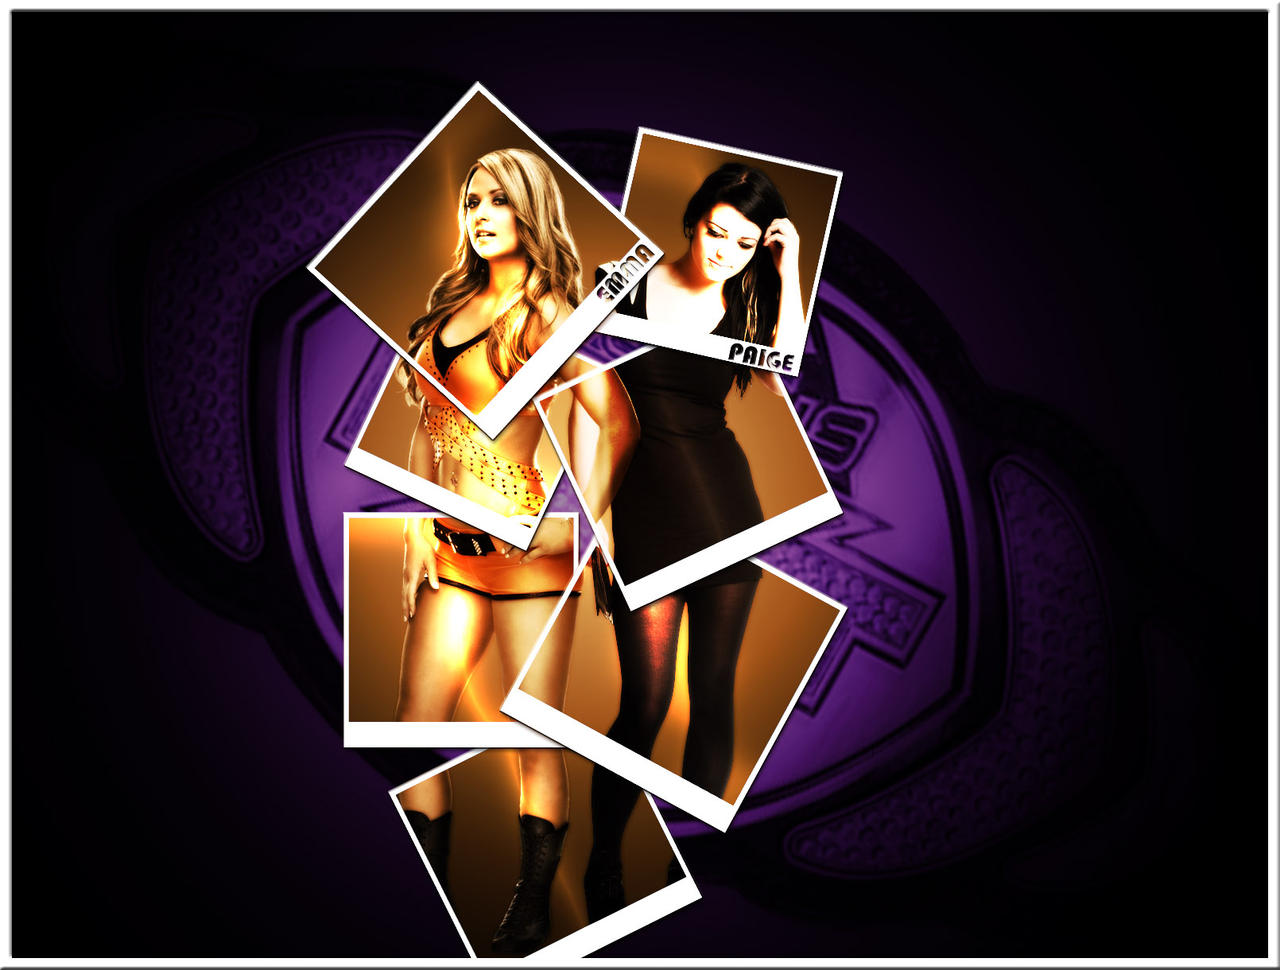 Emma and Paige NXT (WWE)